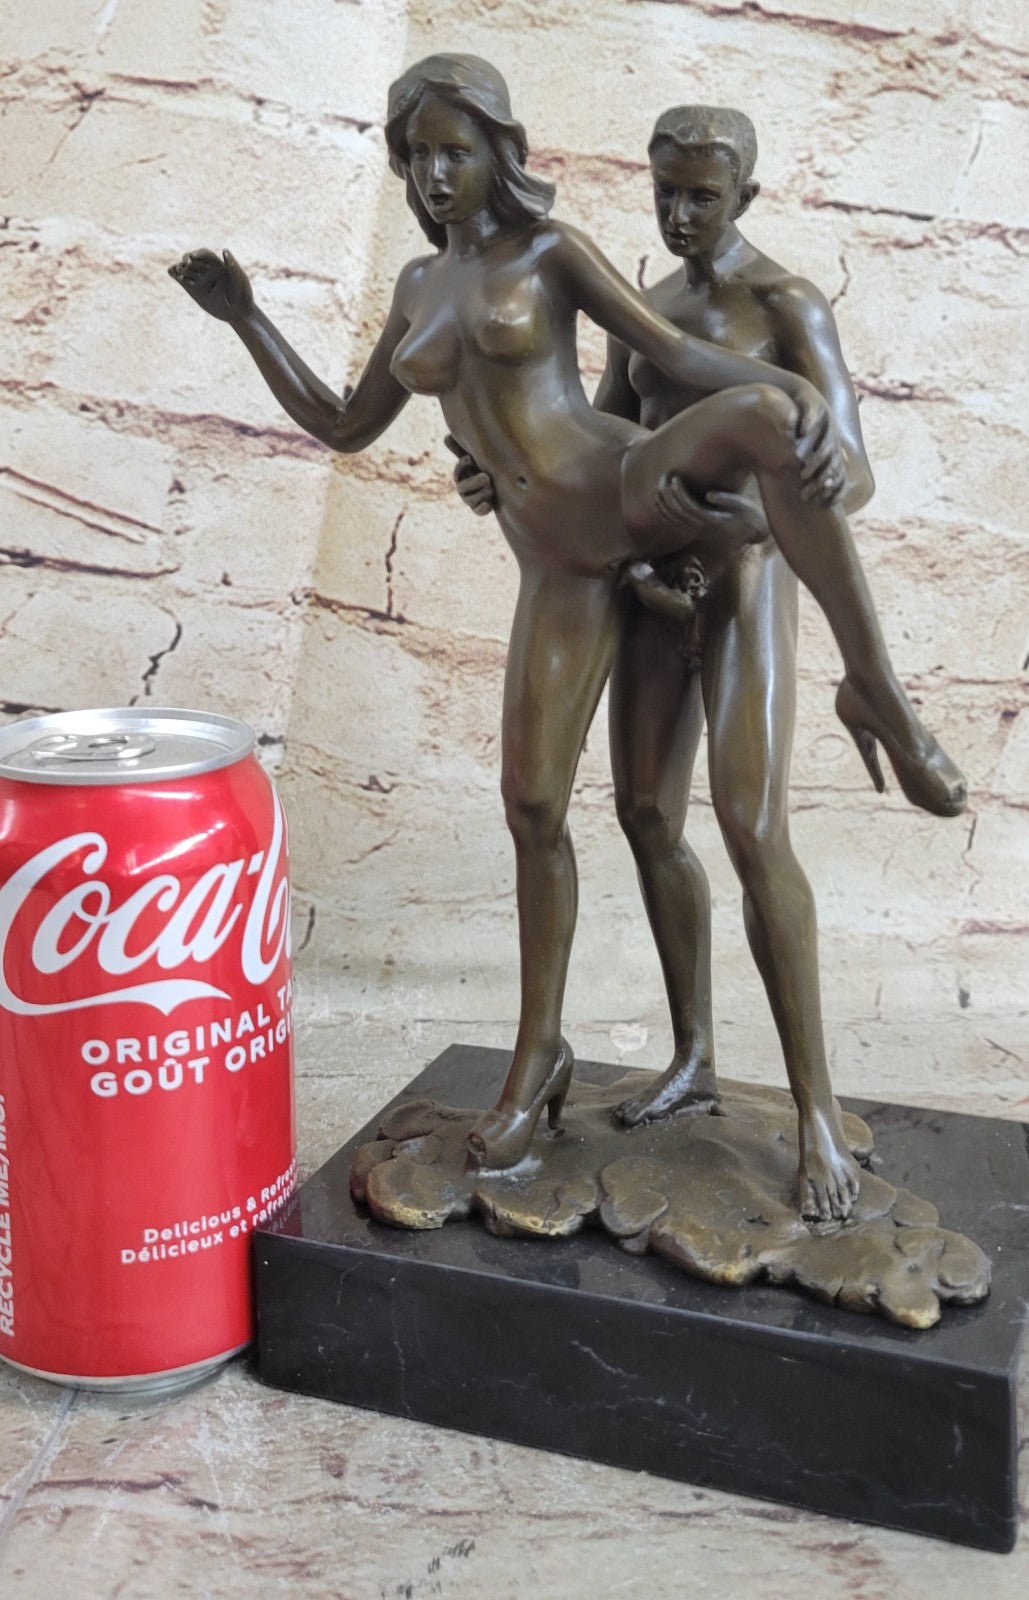 NEW Bronze Sculpture Nude Art Statue, Female Nude Erotic Quality Gift Decor